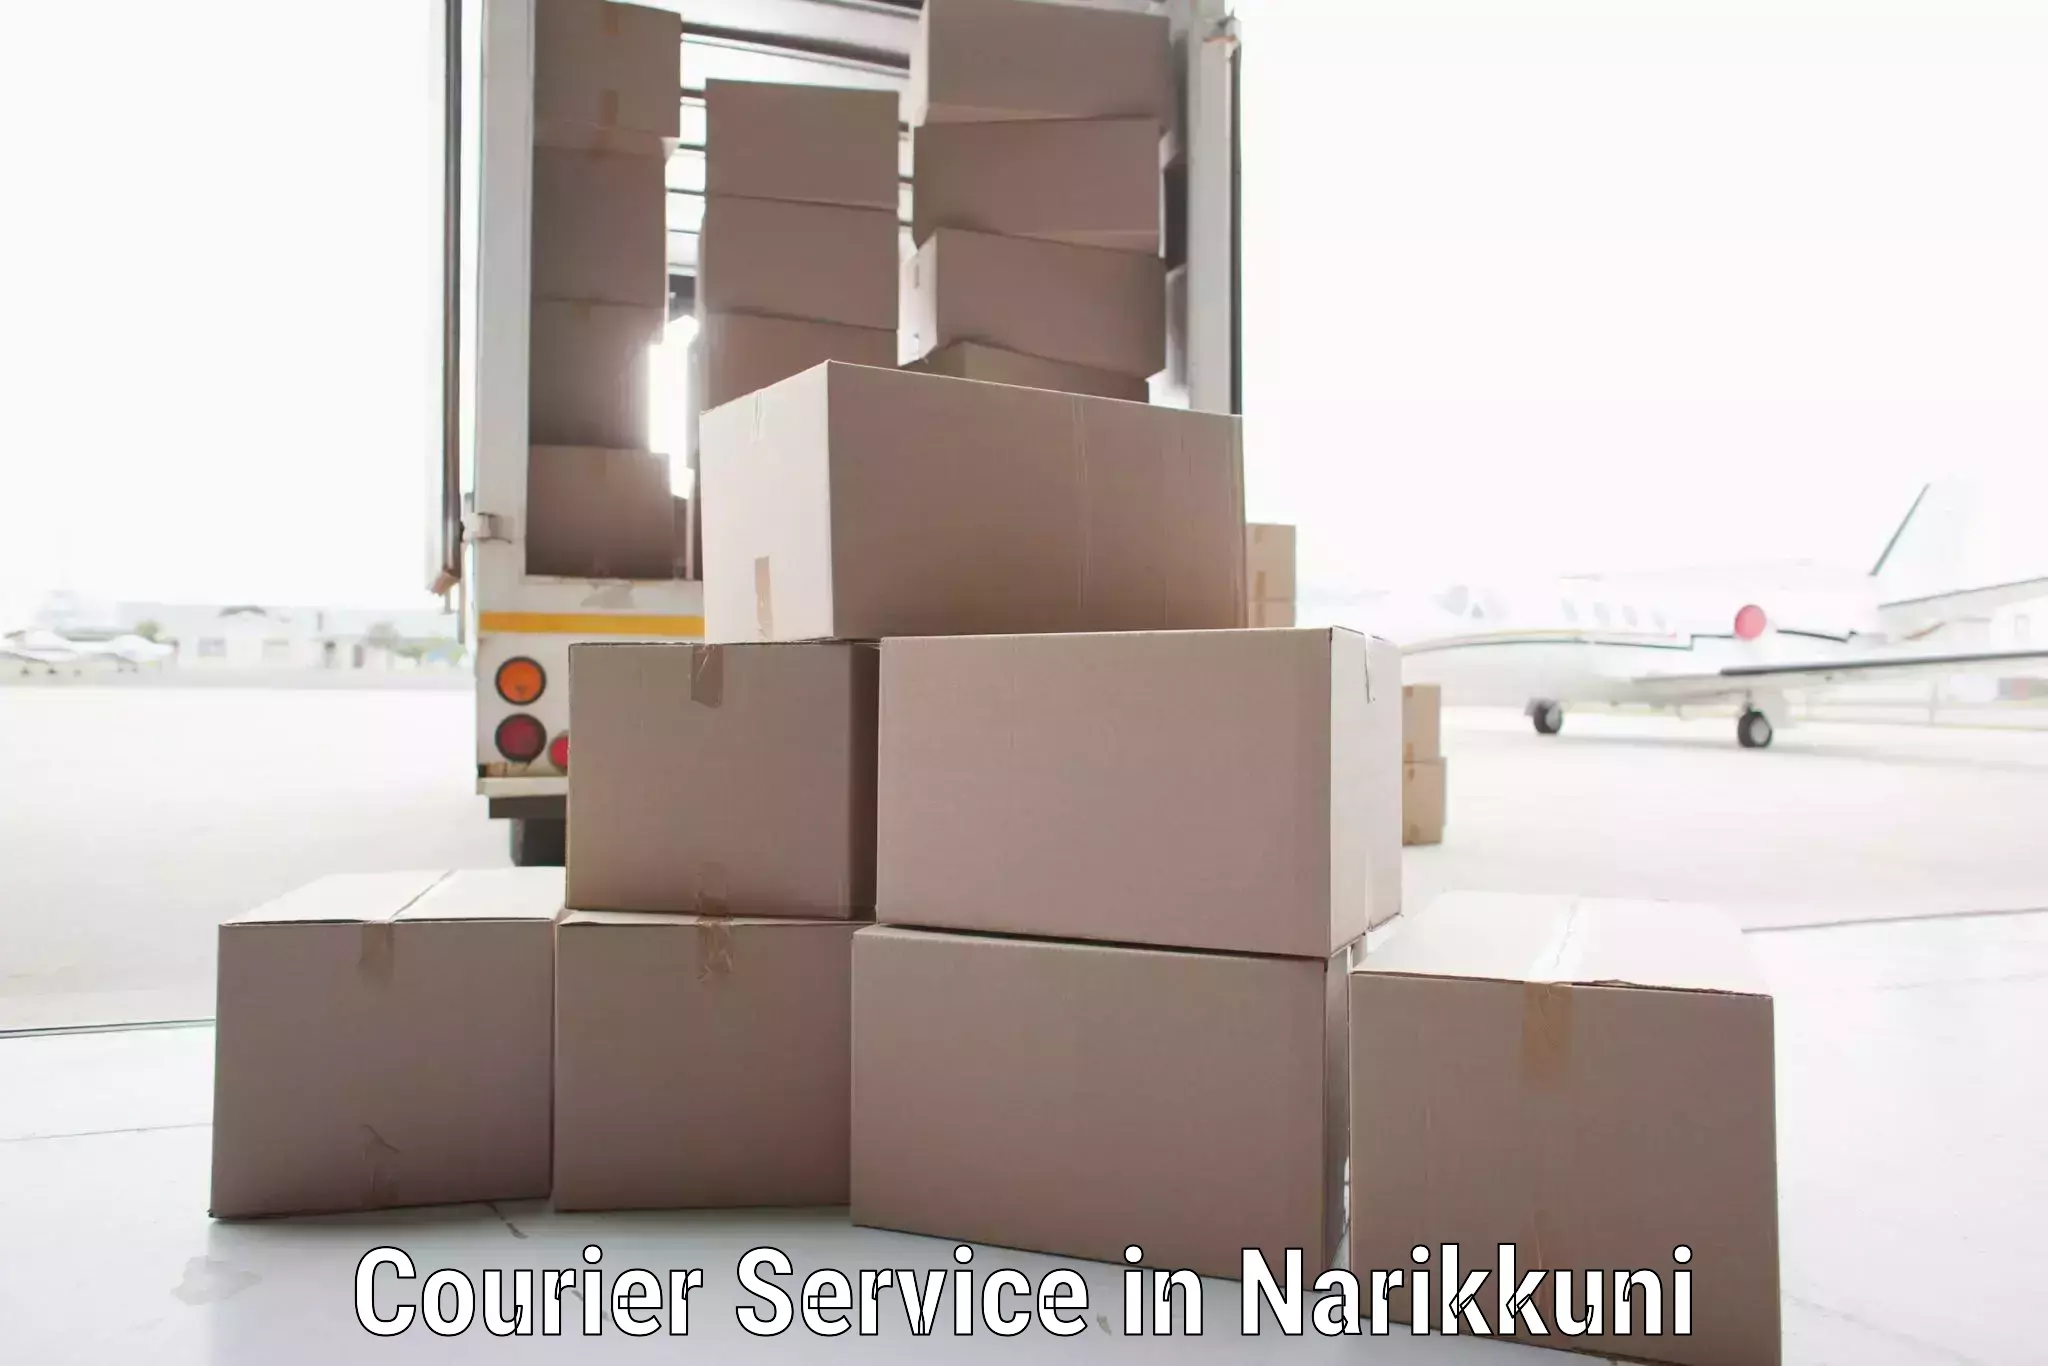 Parcel service for businesses in Narikkuni